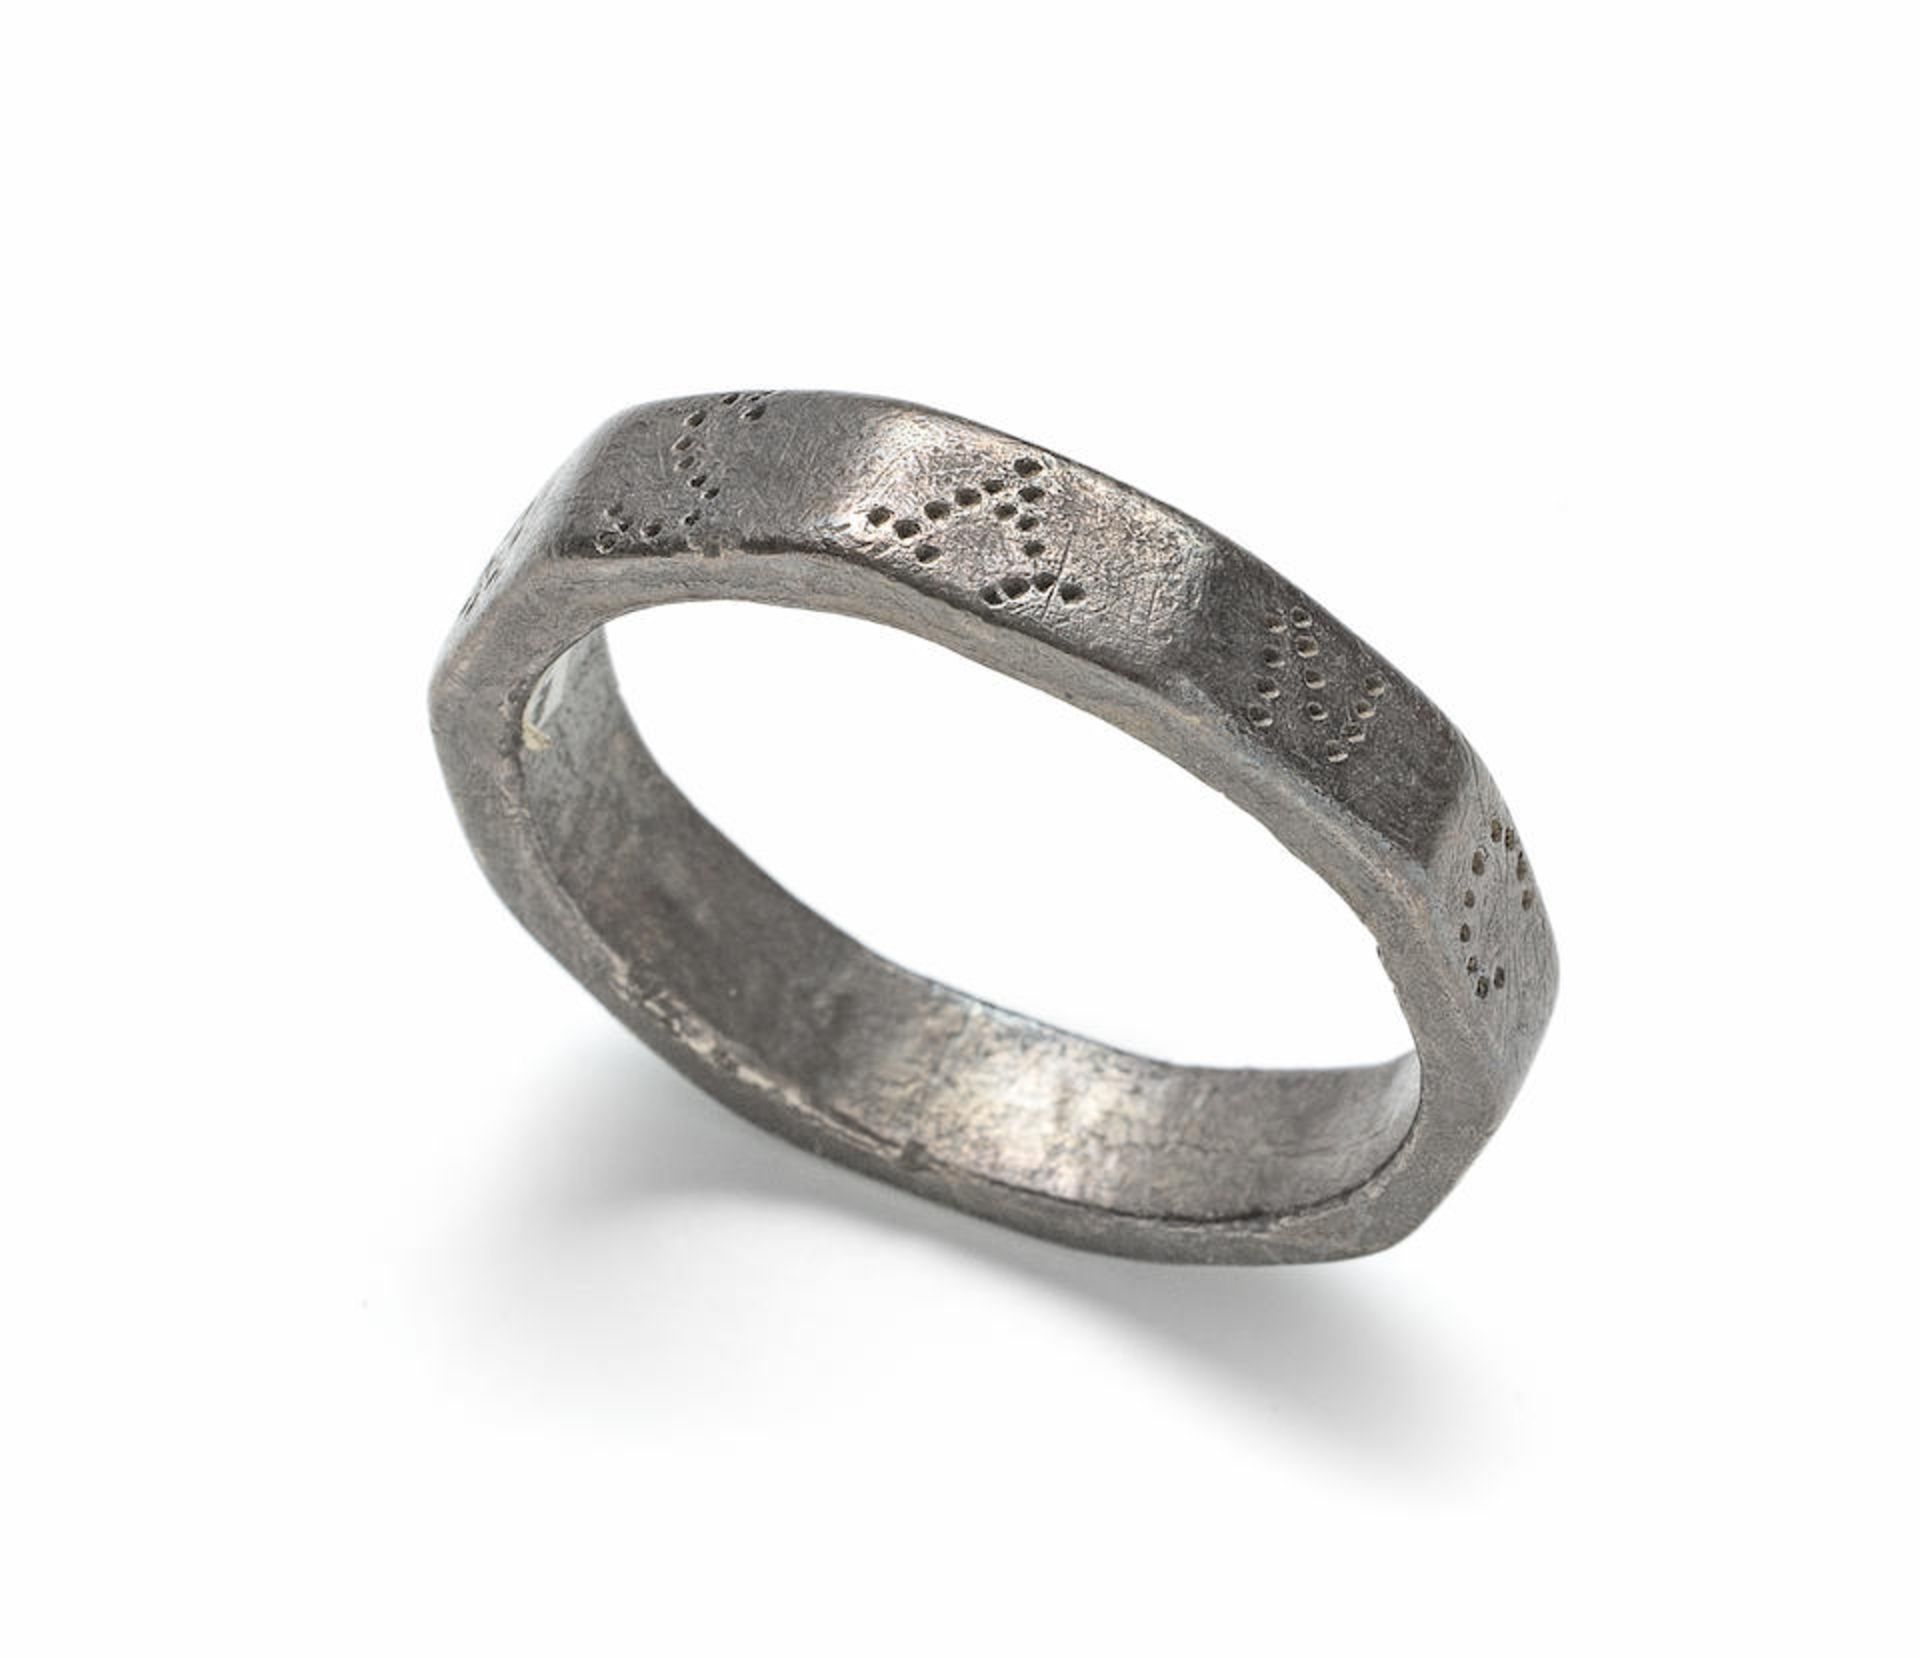 A Roman silver ring